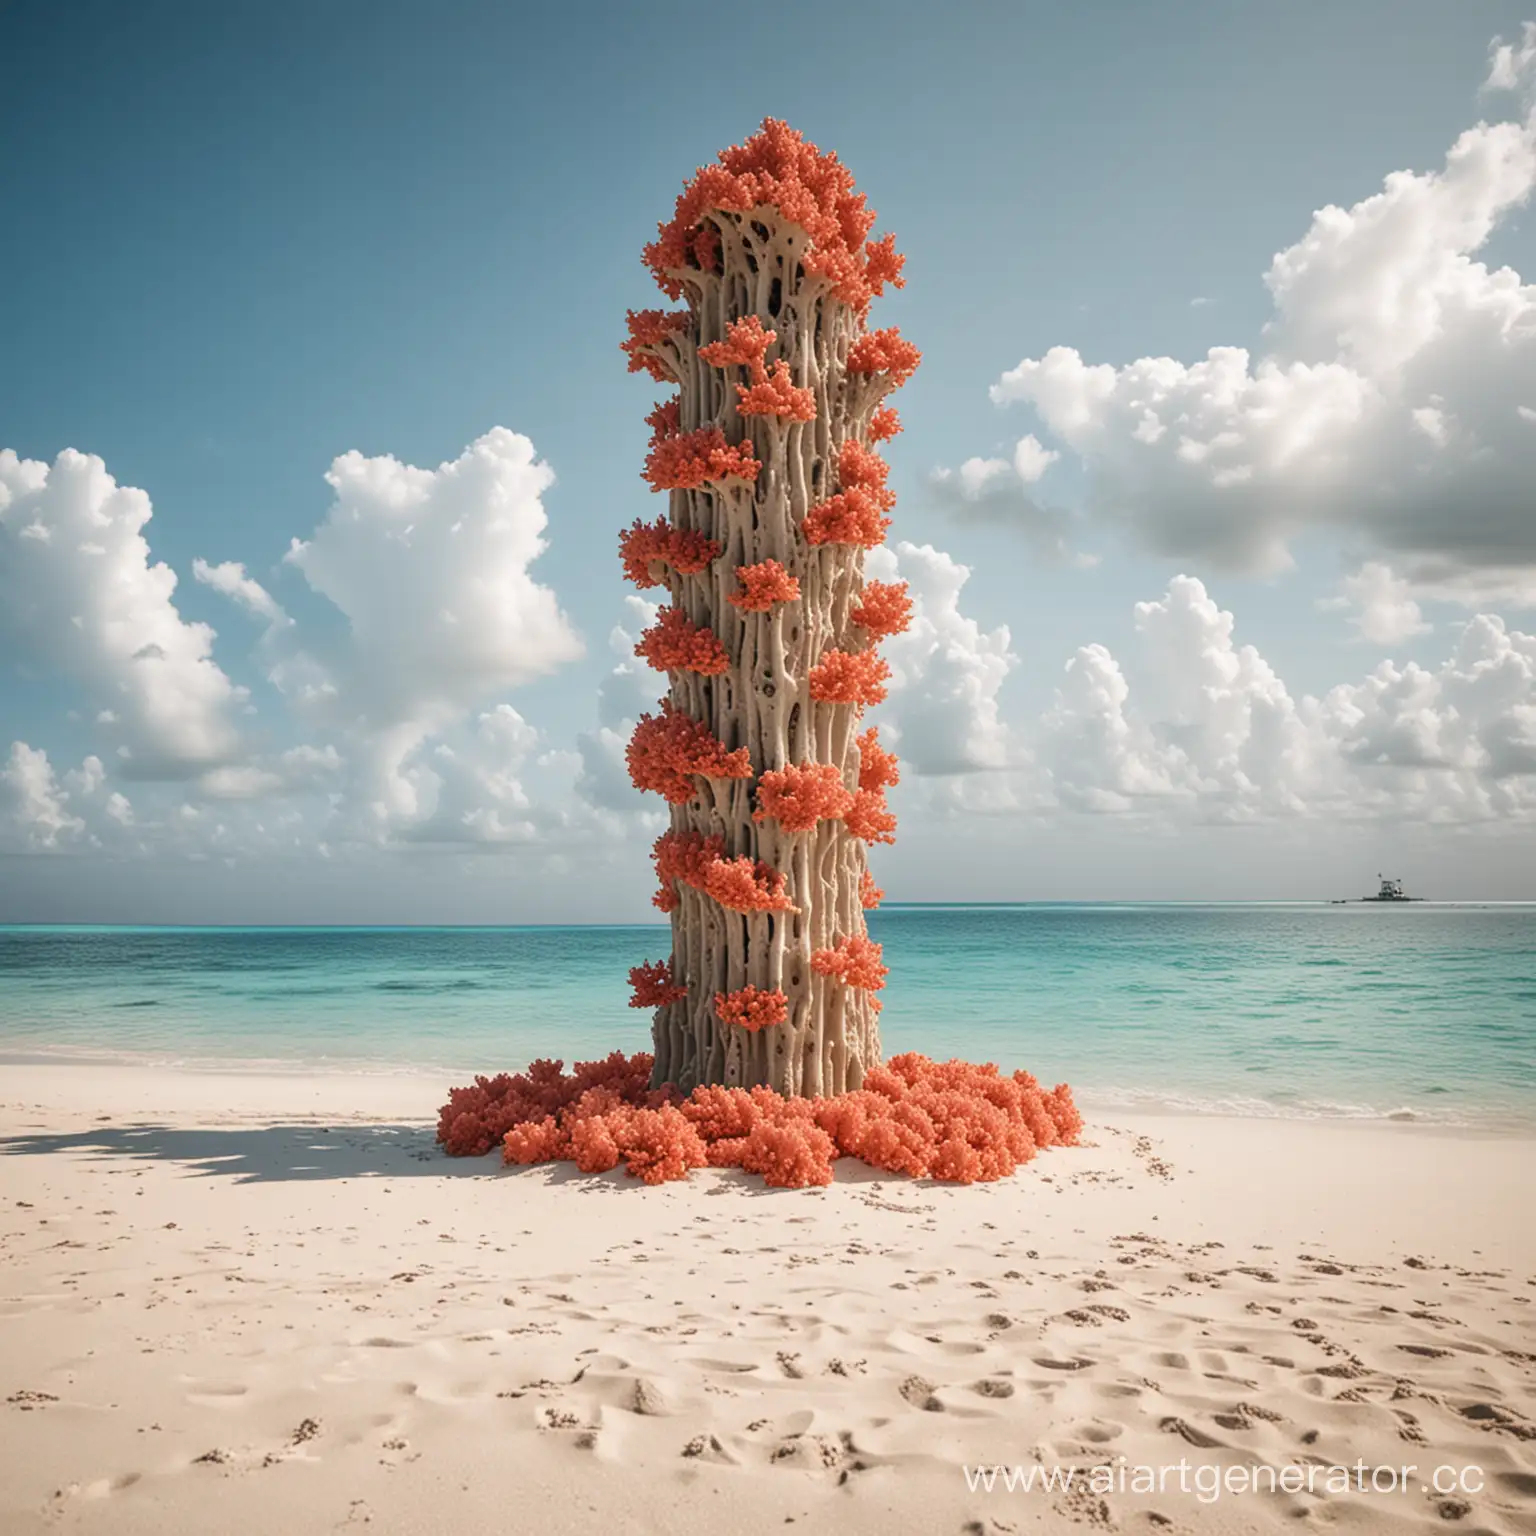 Коралл в виде небоскреба по среди океана на песочном острове
